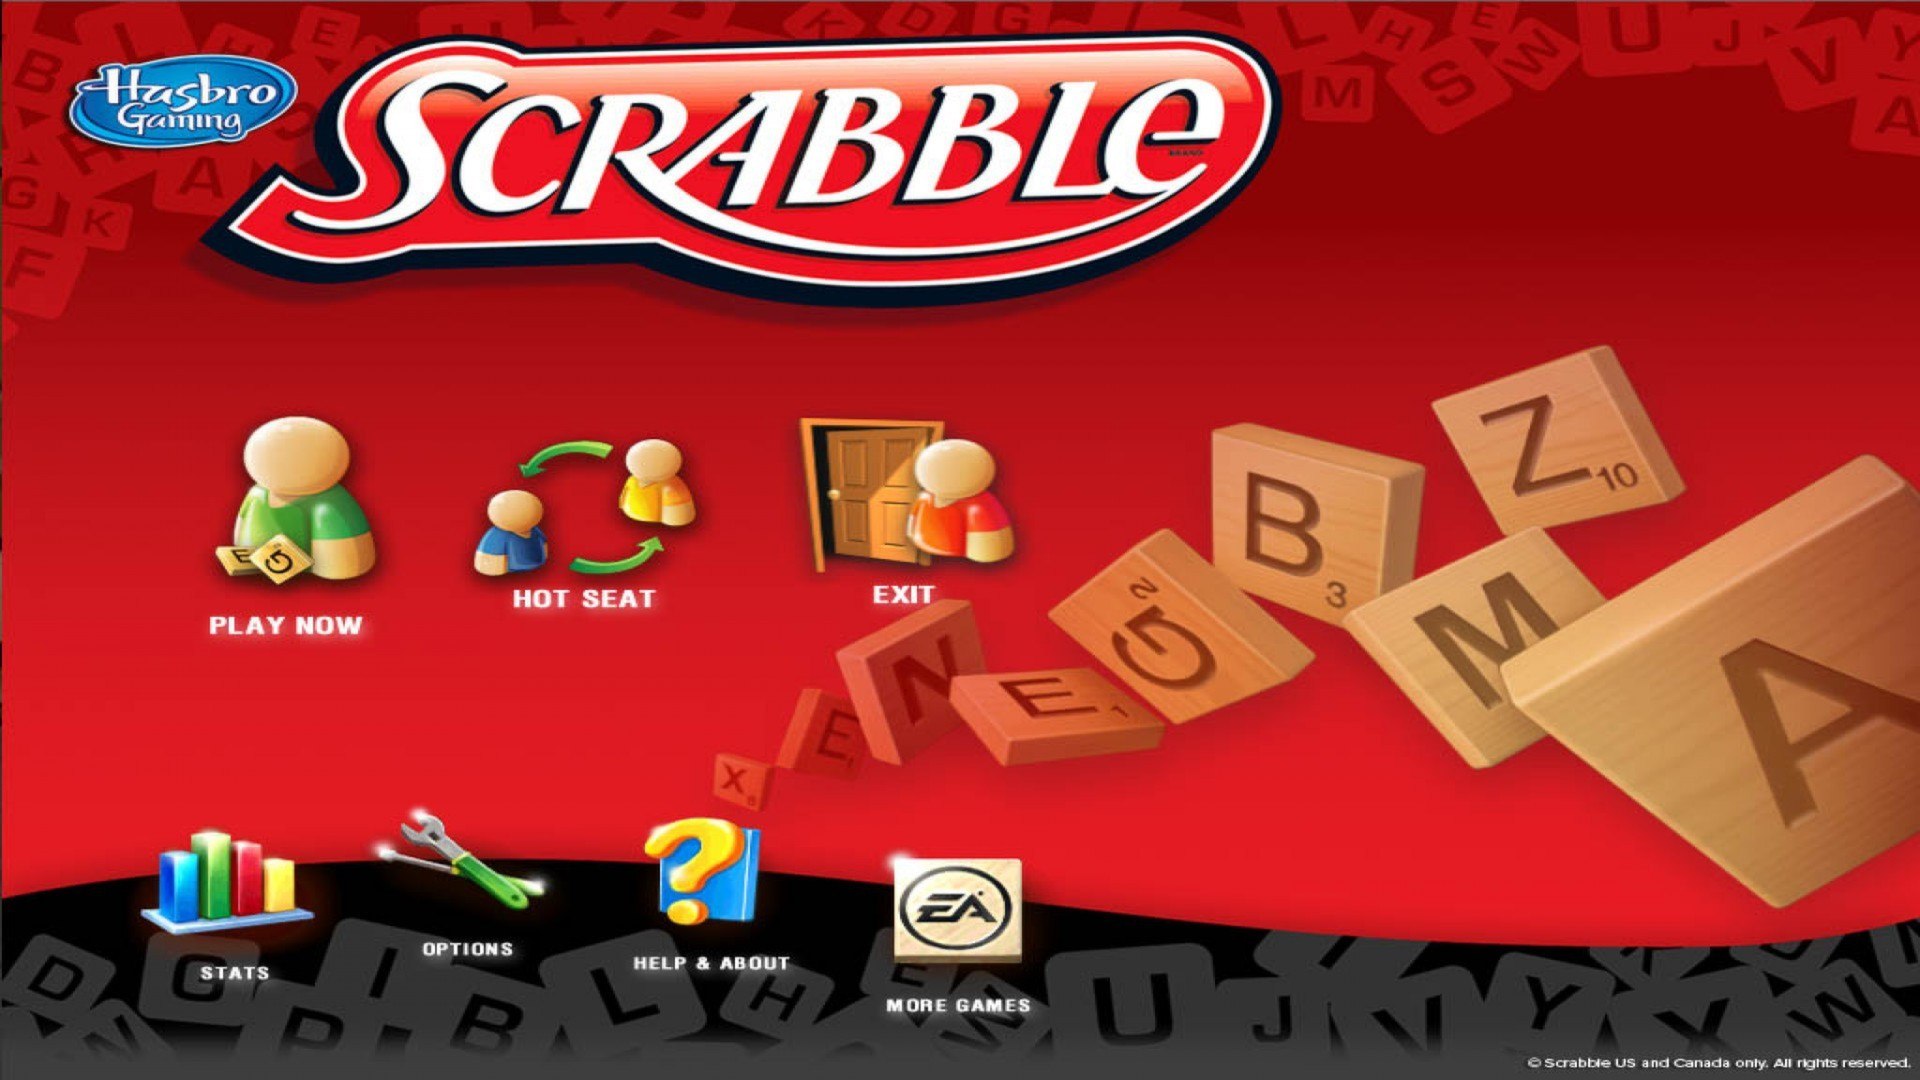 Scrabble Steam Gift [$ 564.97]